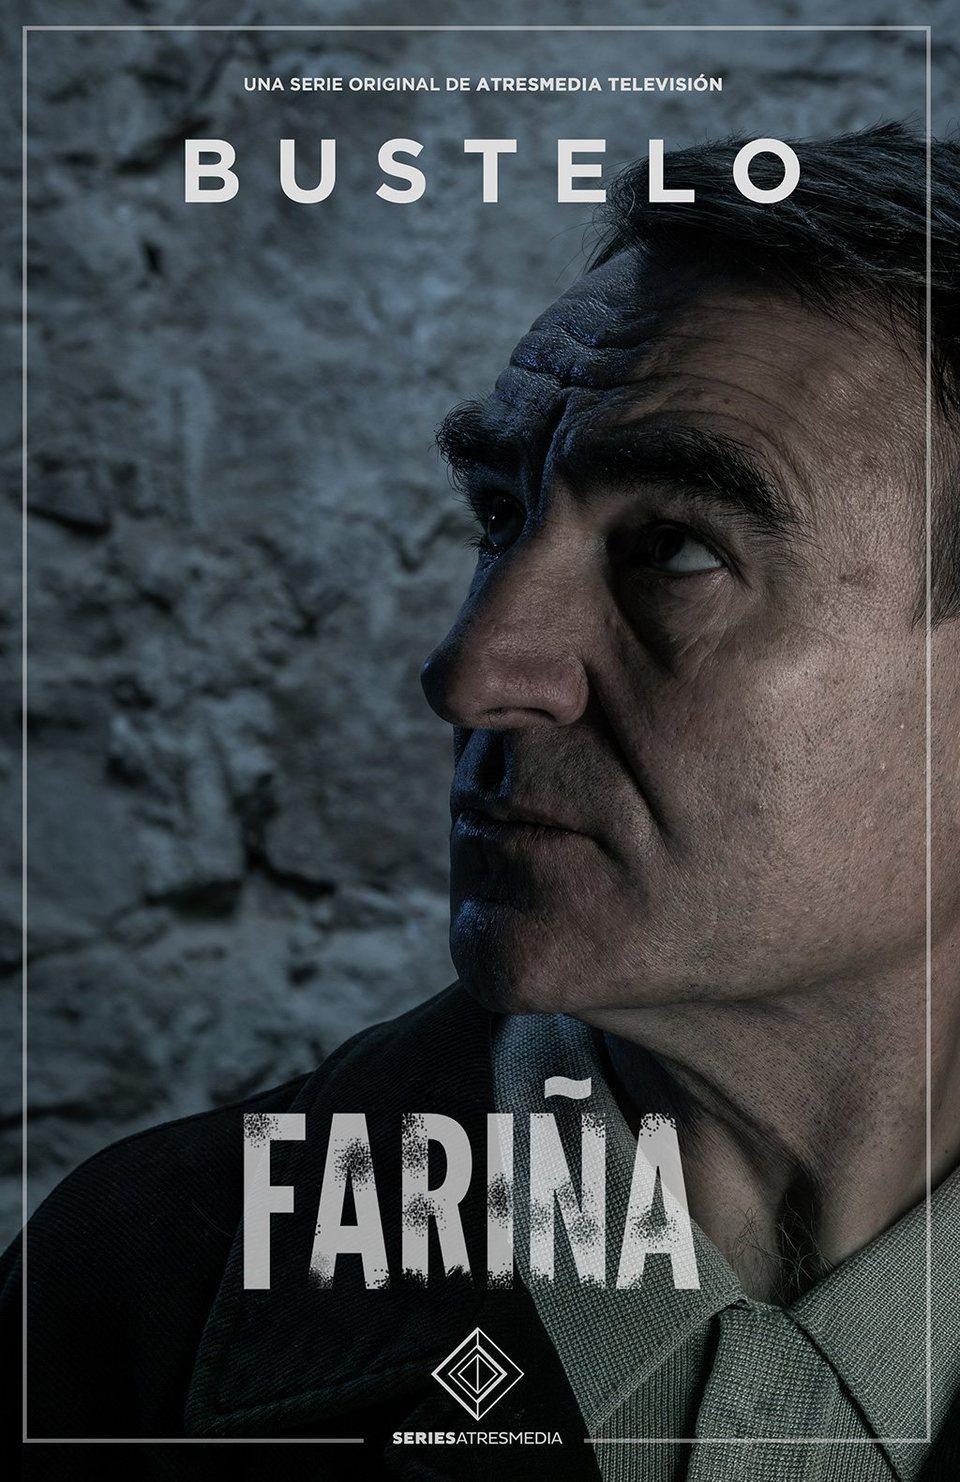 Poster of Farina - Bustelo